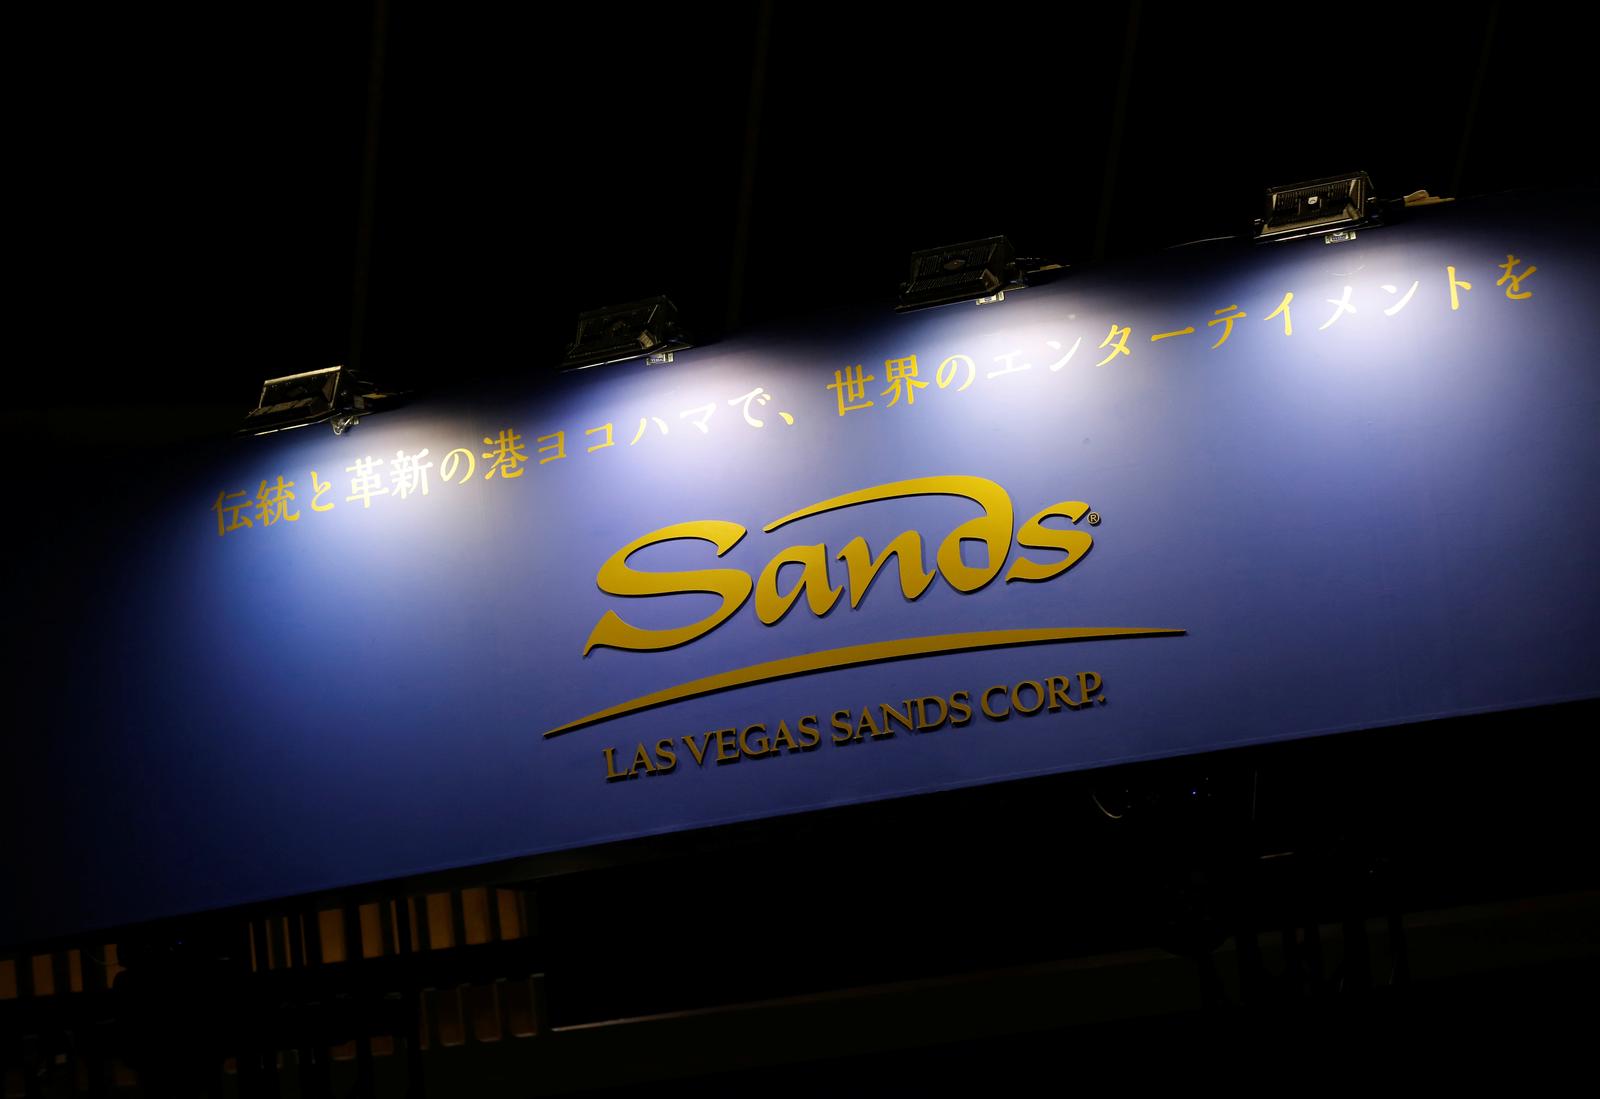 Las Vegas Sands mulling $6 billion sale of Vegas casinos - source